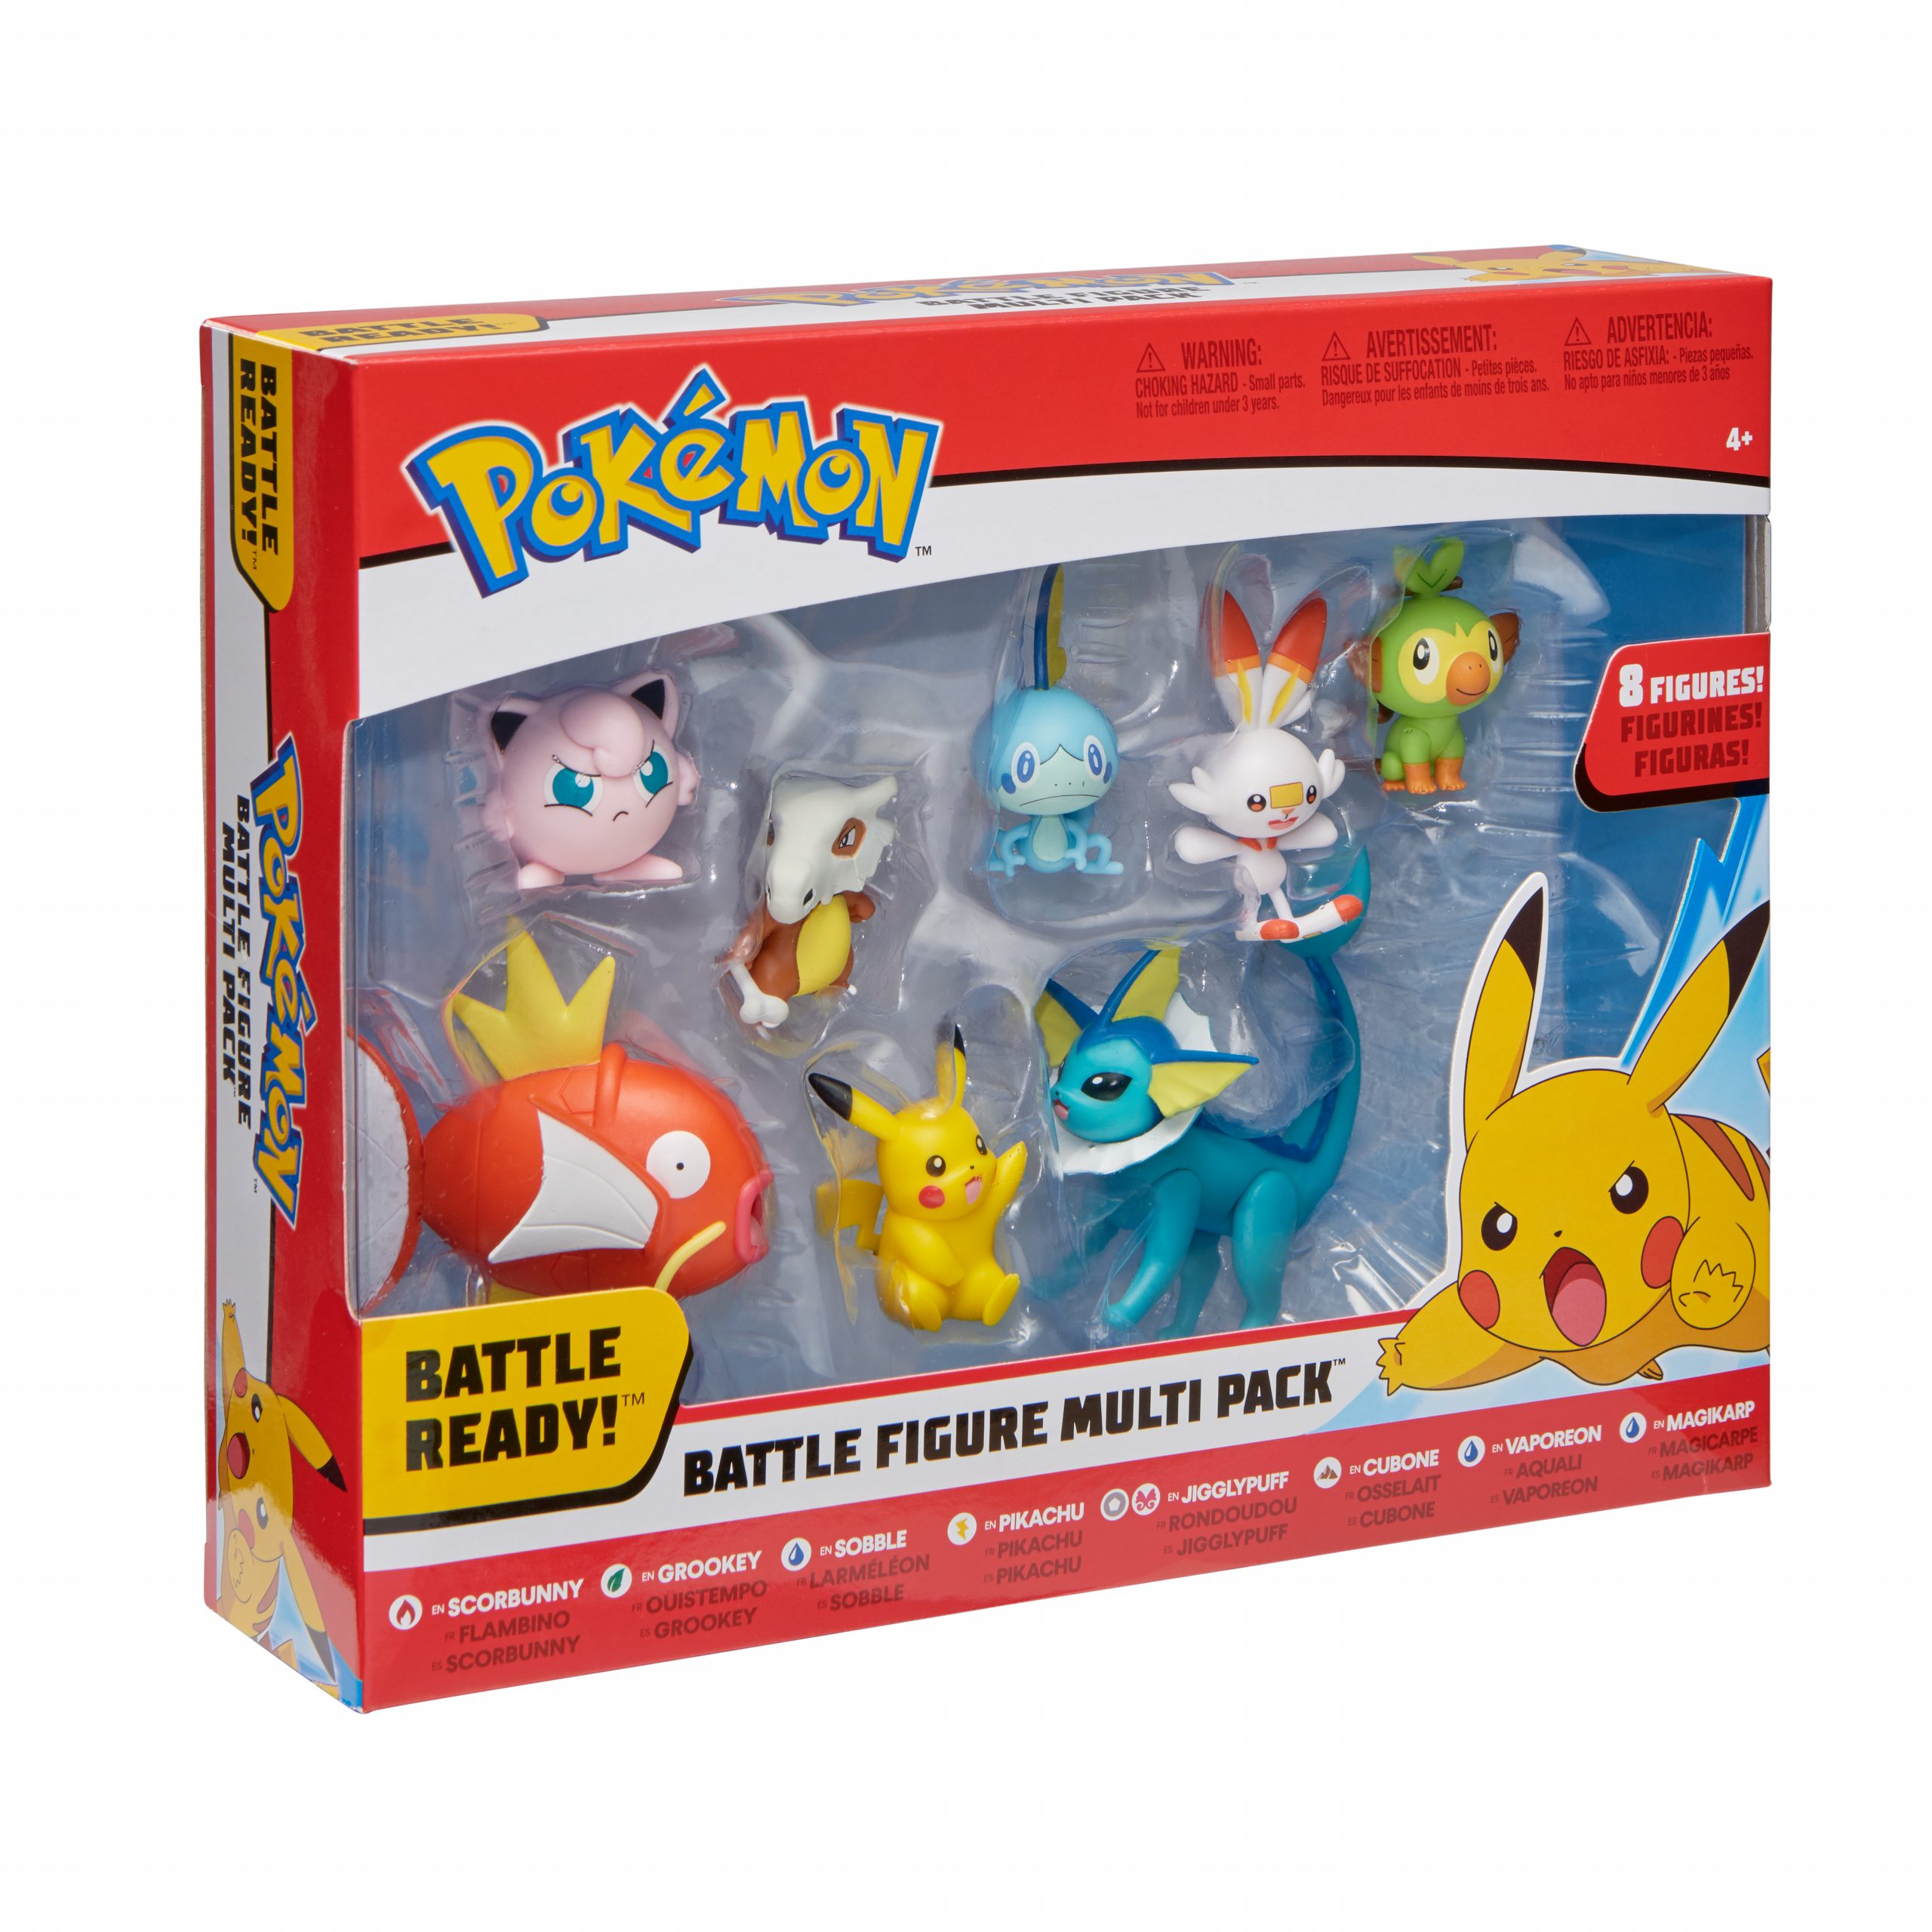 Pokémon Set de batalla multipack 8 Figuras by Pokémon • Gemafer